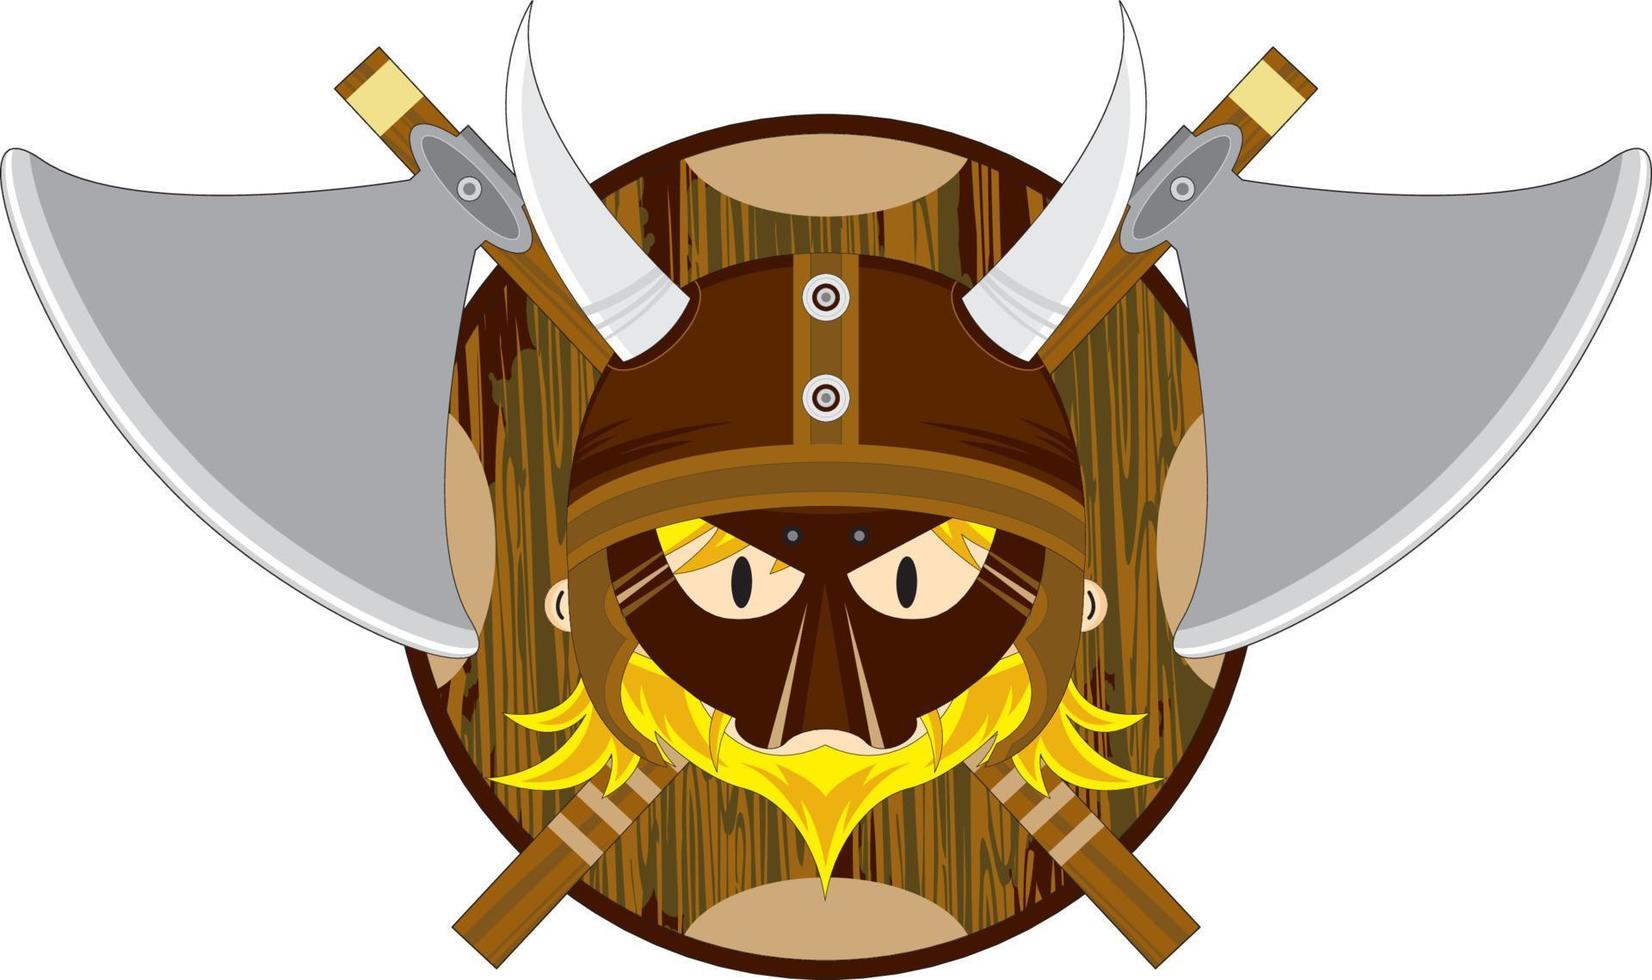 Cute Cartoon Viking Warrior with Shield and Axes vector